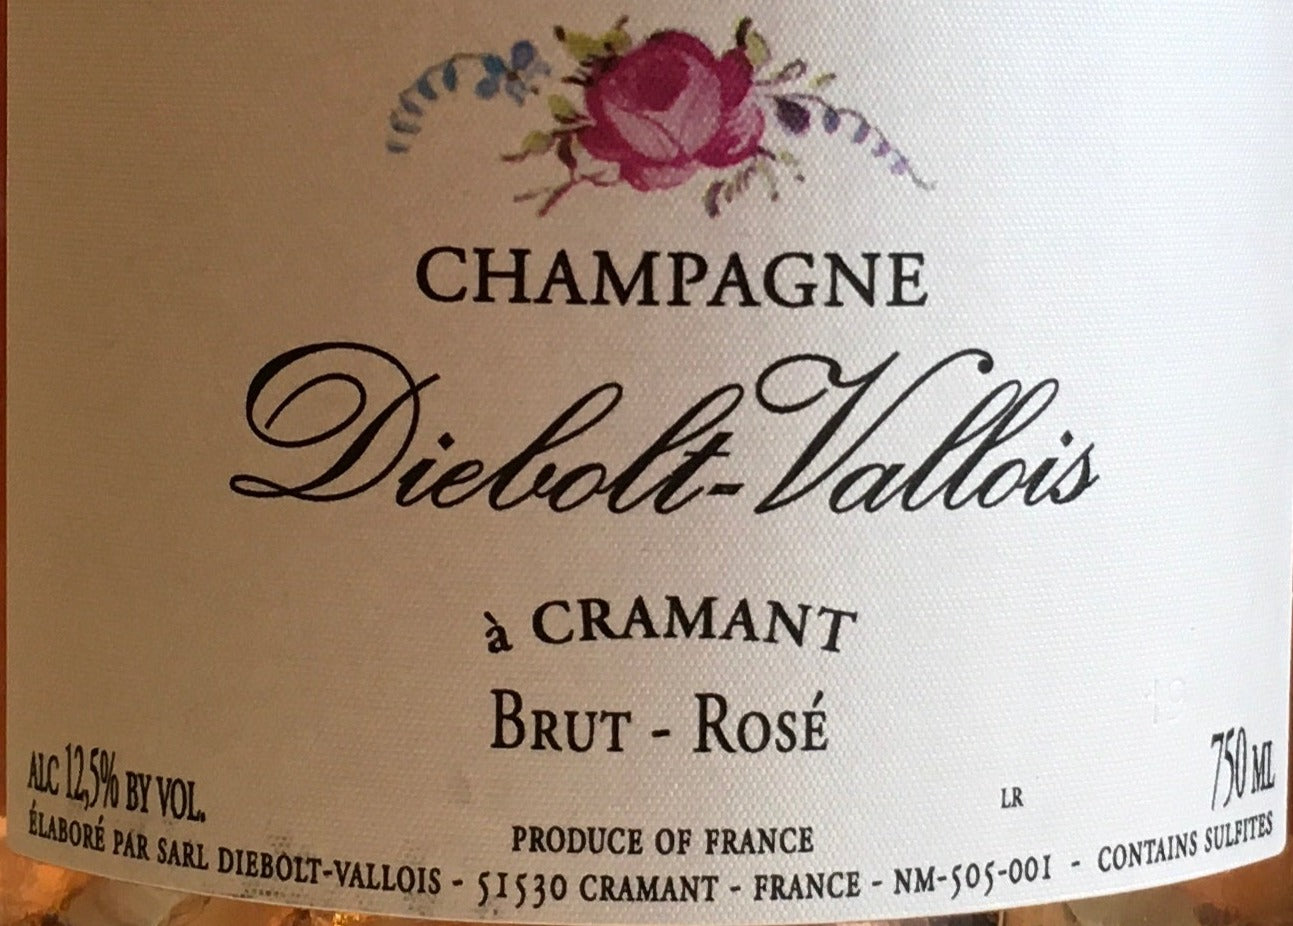 Diebolt-Vallois - Brut Rose Champagne